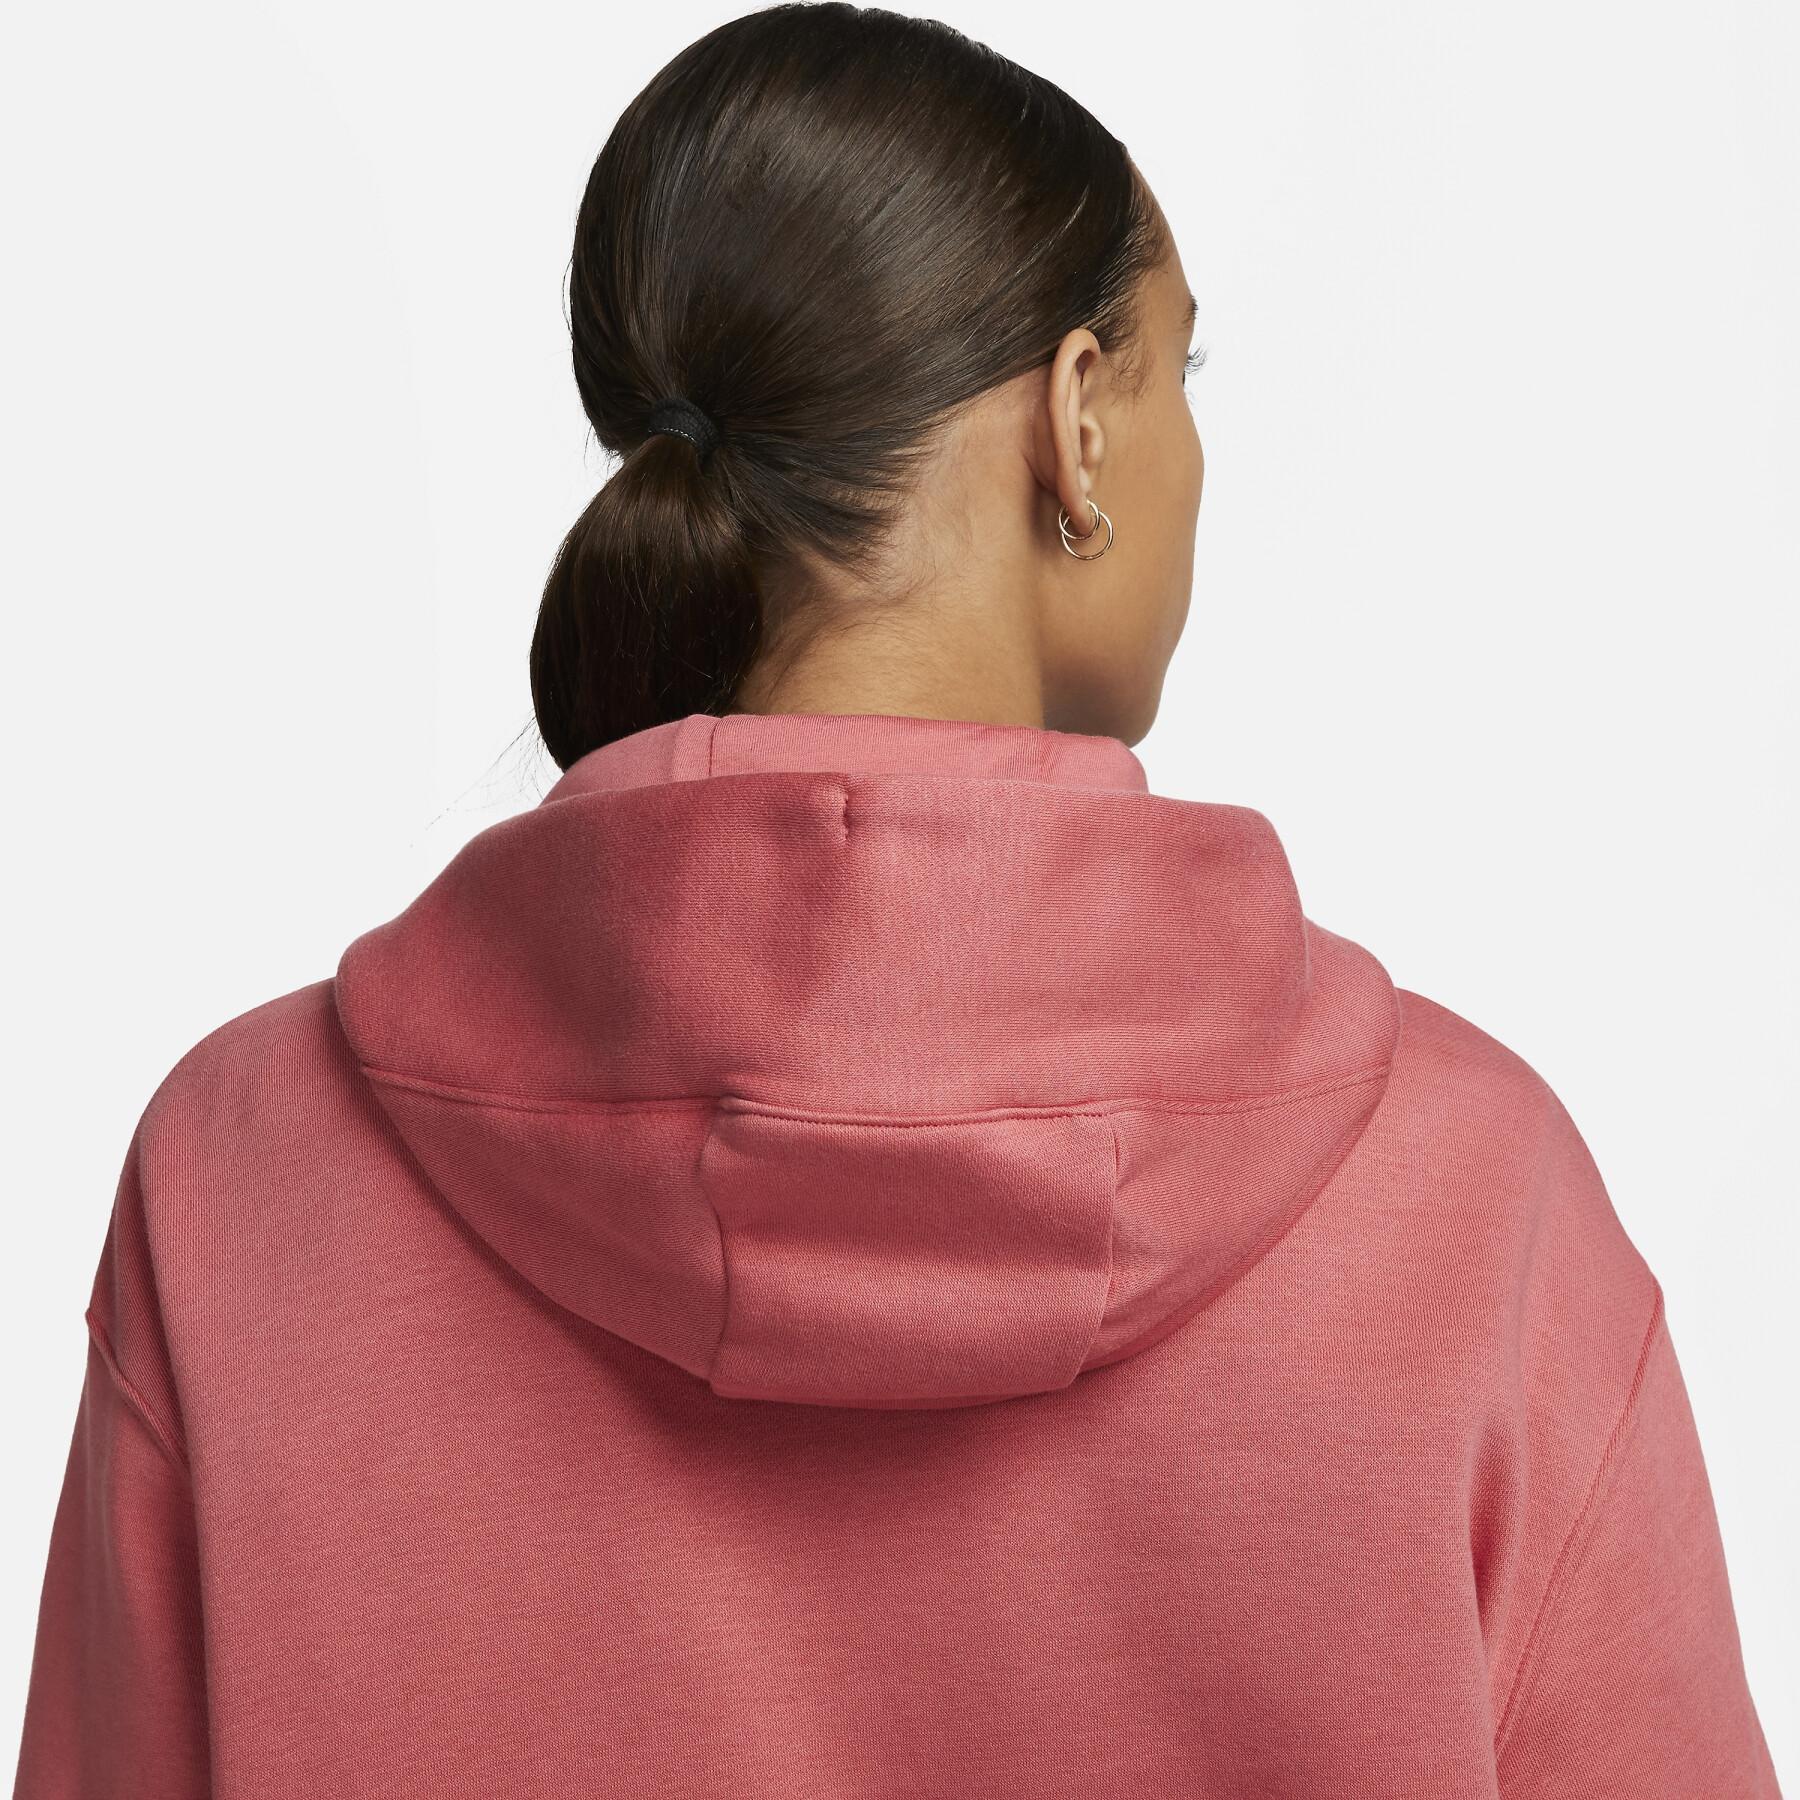 Sweatshirt mulher Nike Fleece OS PO HDY MS